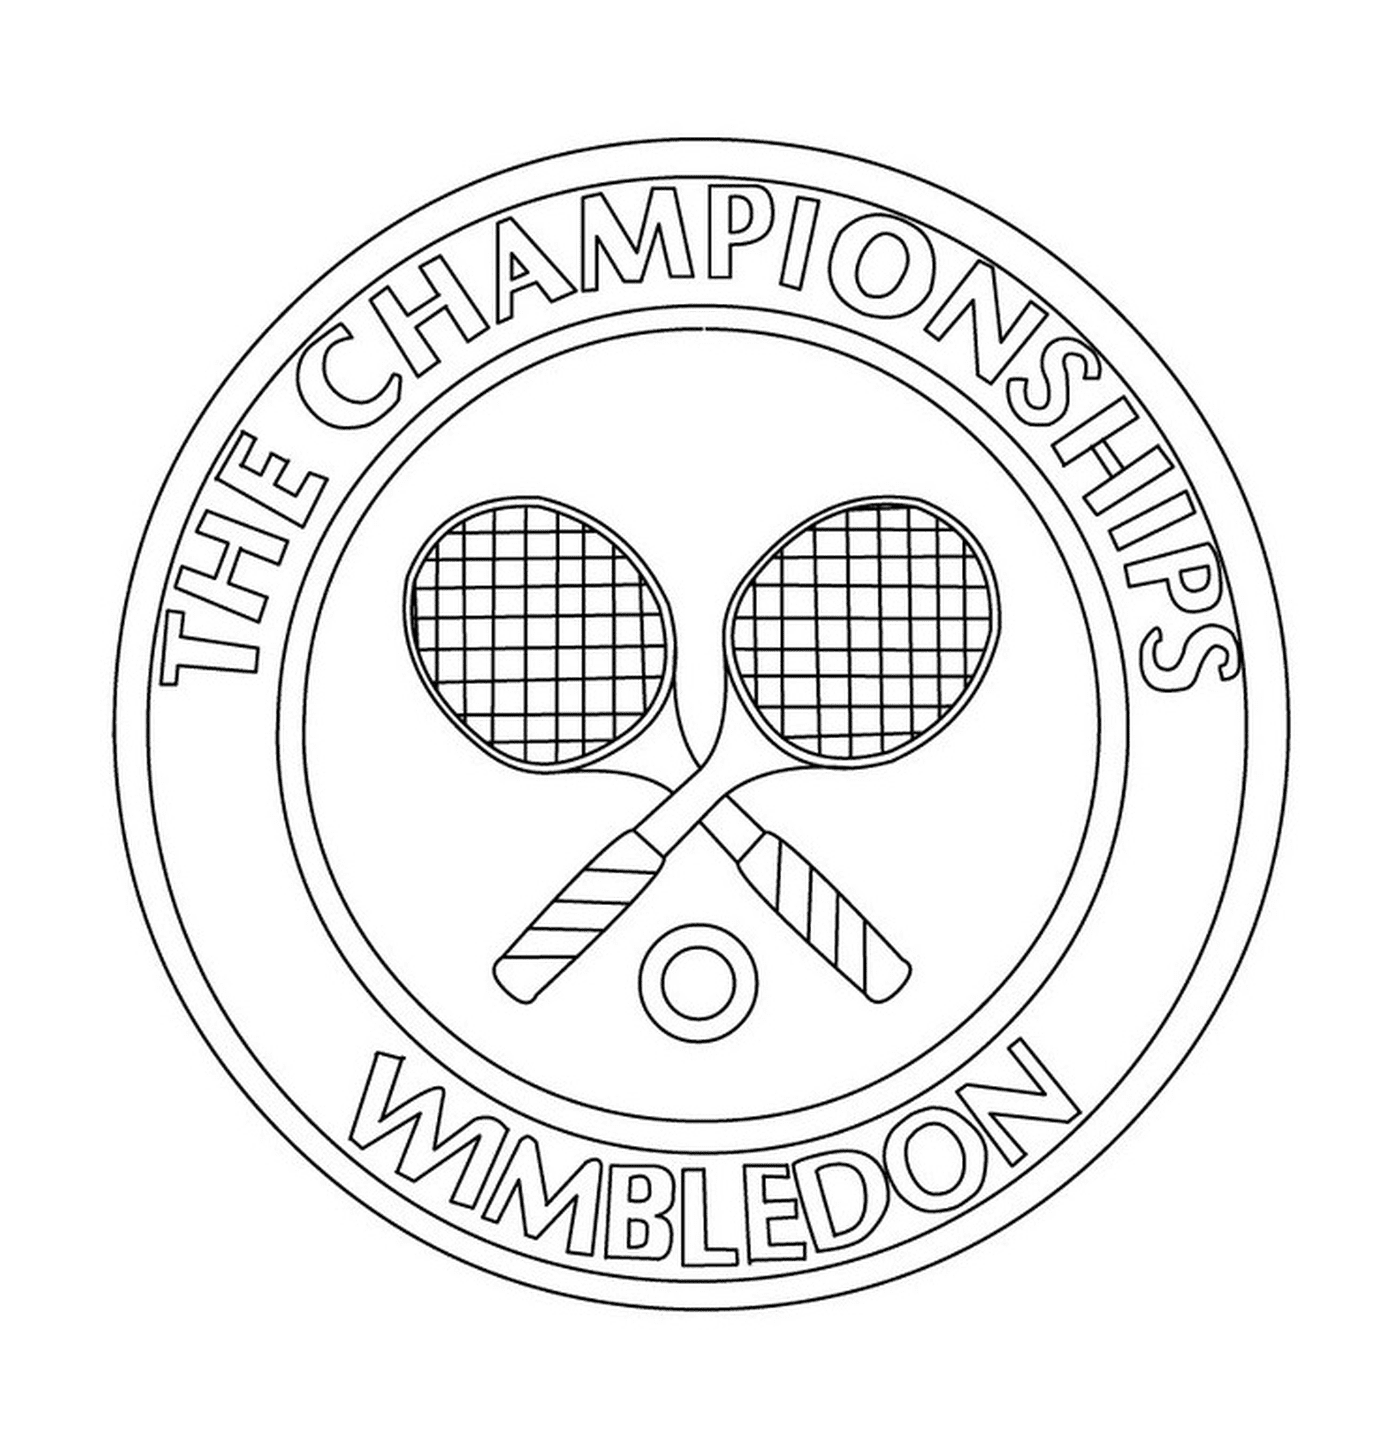  Теннисный логотип Чемпионат Уимблдон 